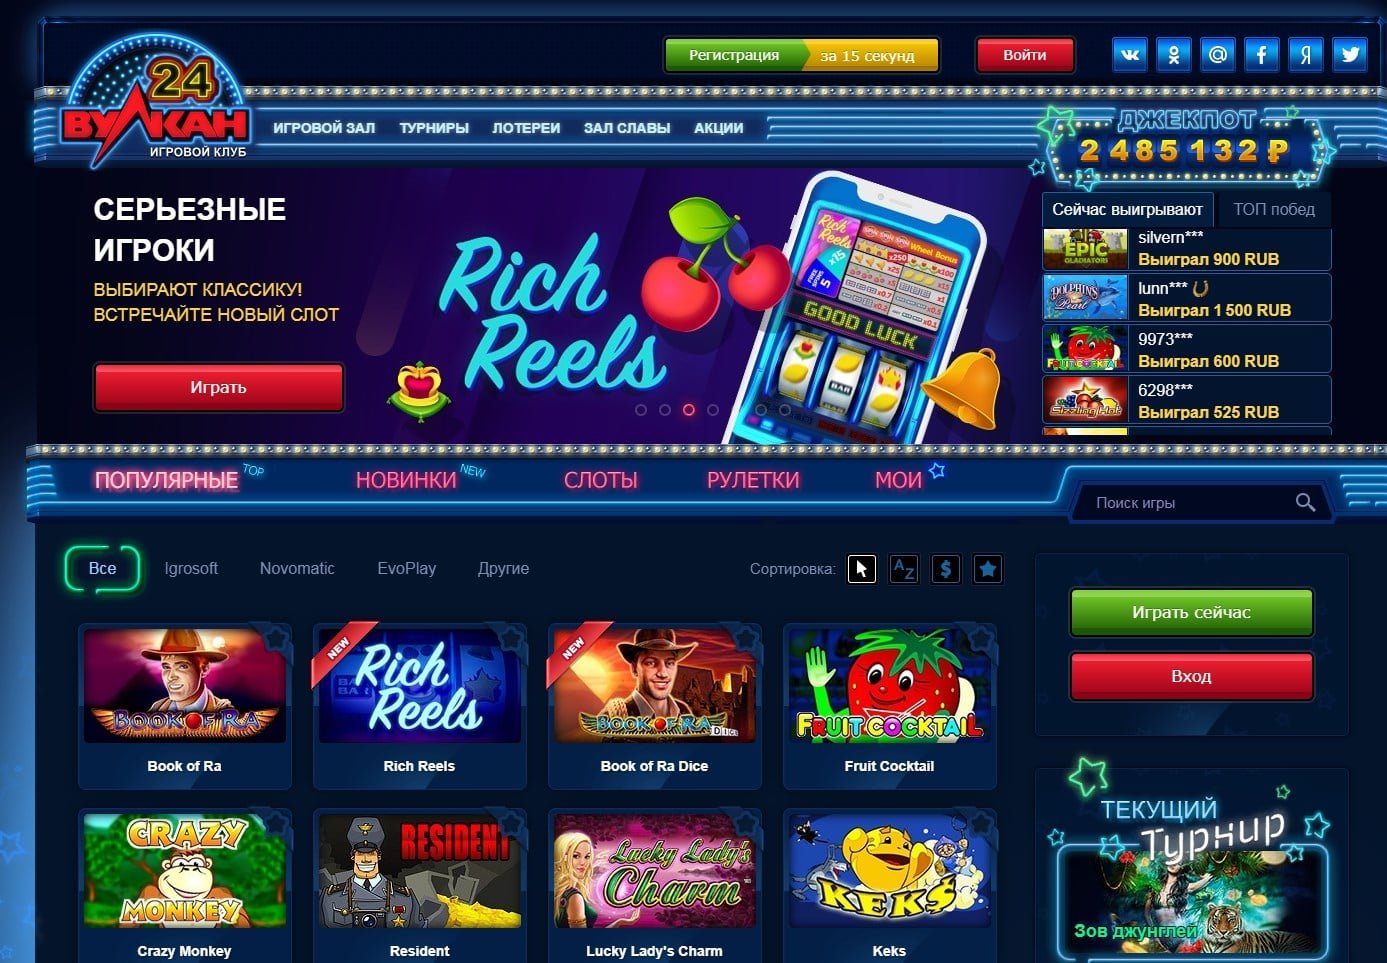 Вулкан казино онлайн официальный сайт casino vulcan info ставки на спорт для windows phone